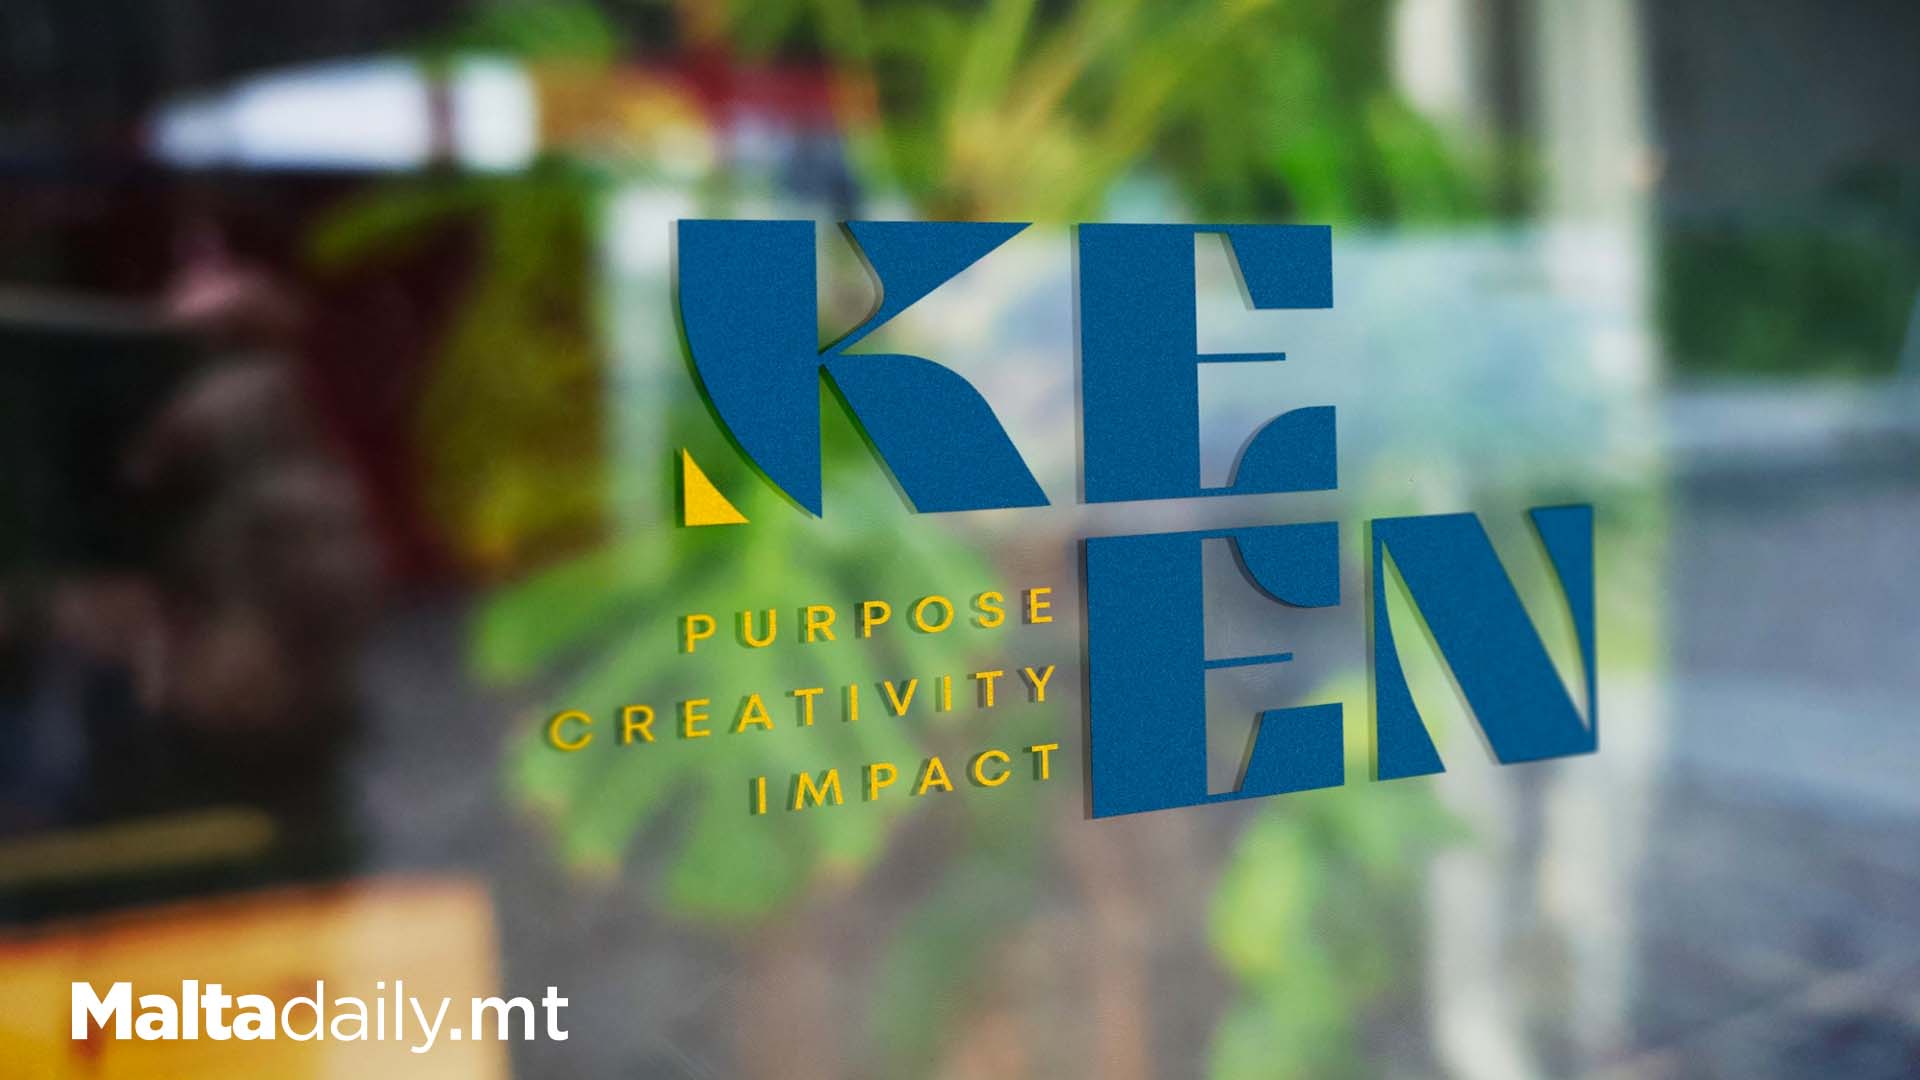 Keen Creative Digital Agency On A Visionary Re-Branding